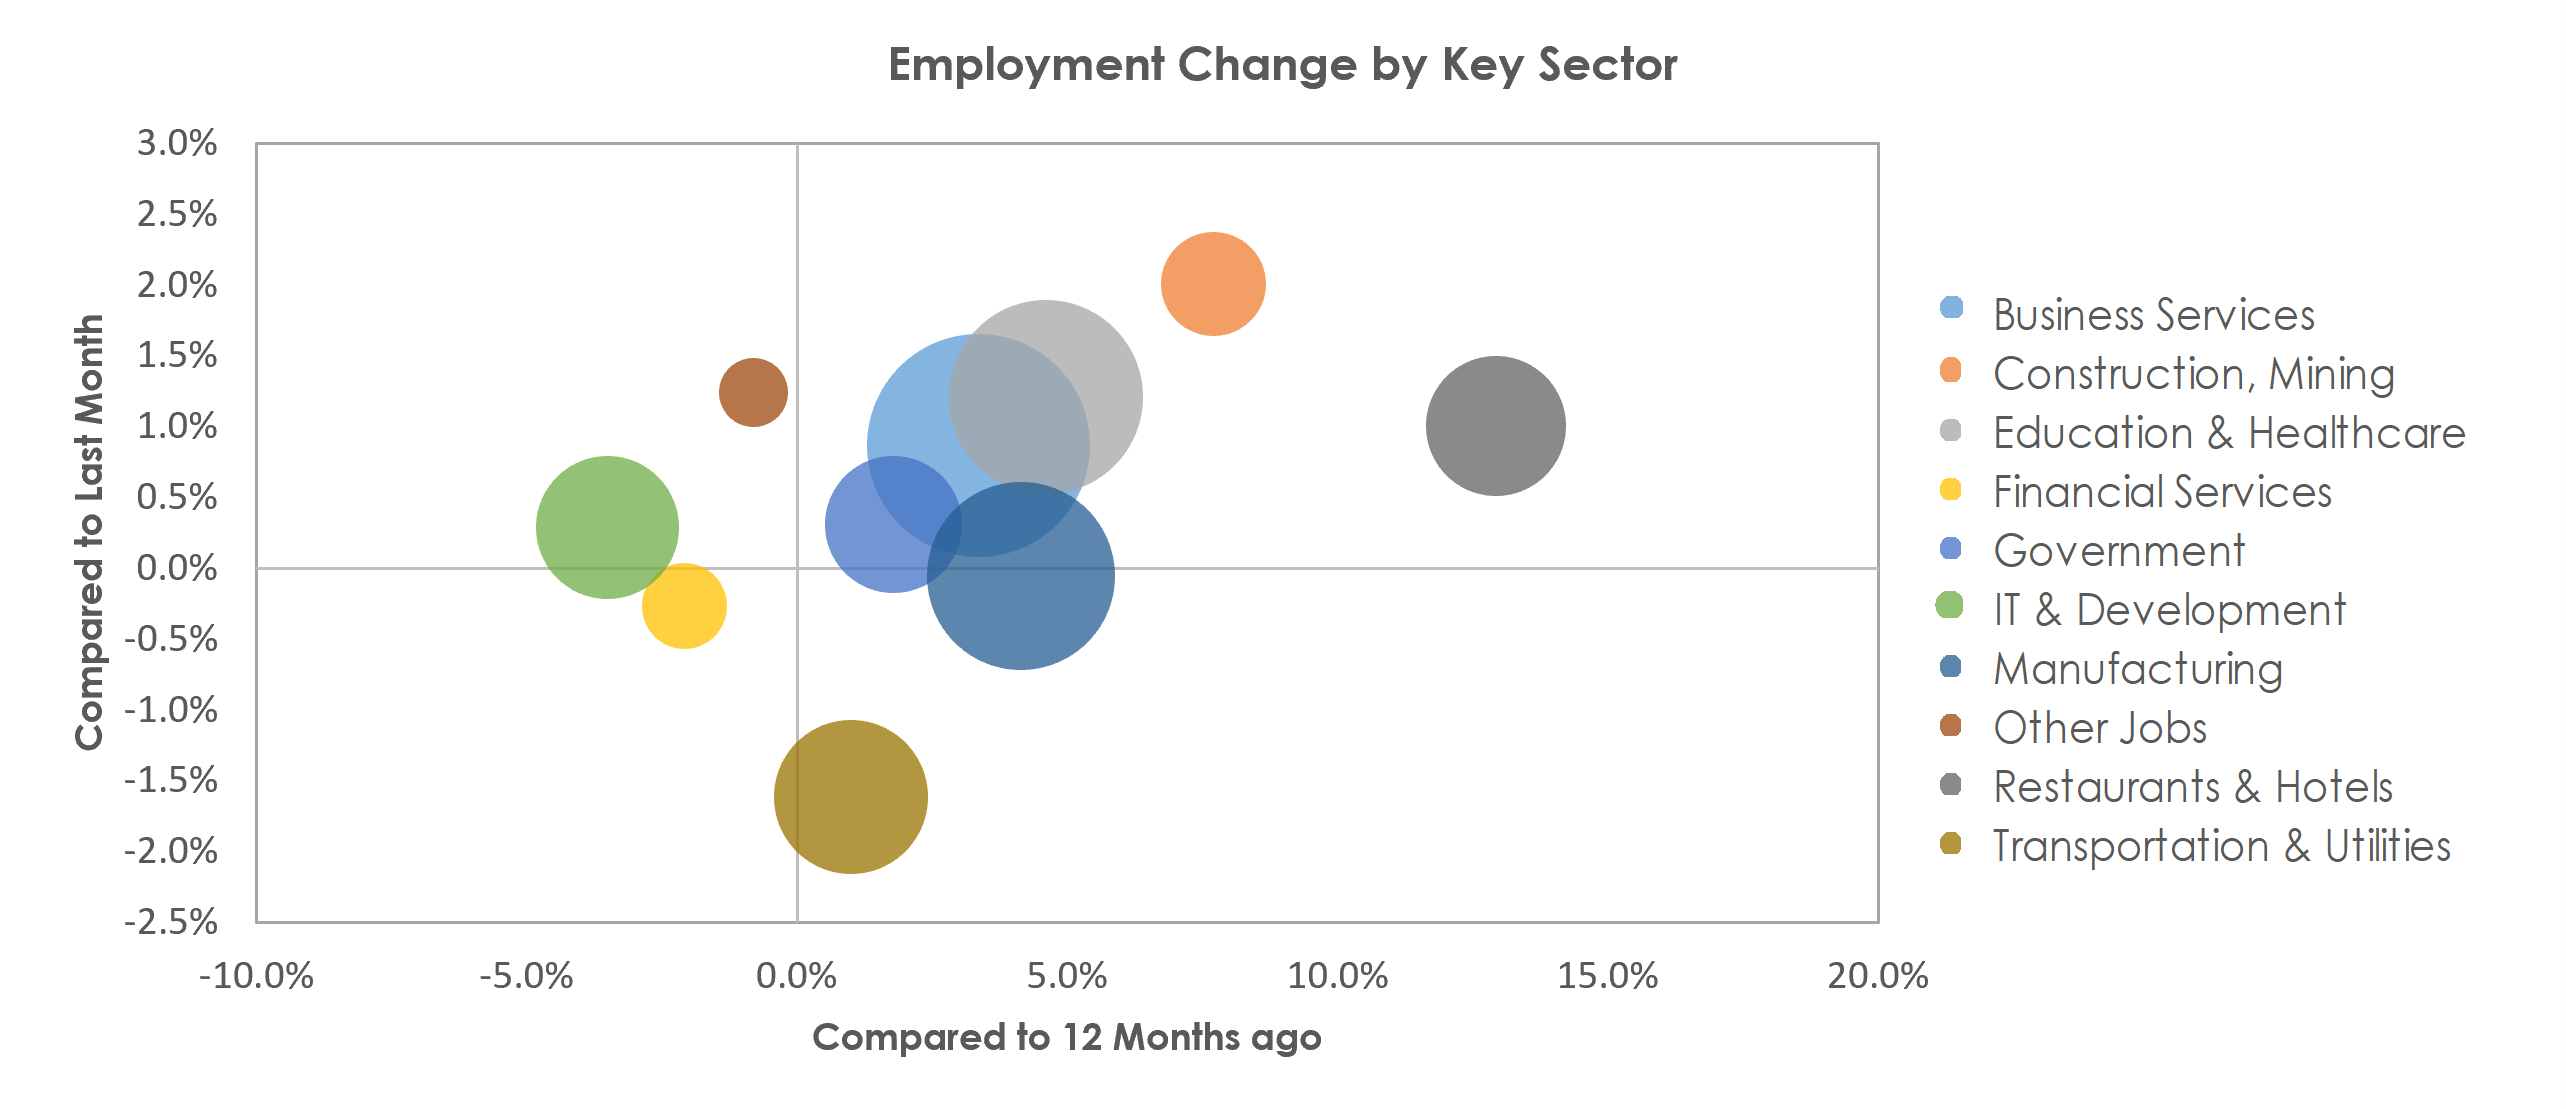 San Jose-Sunnyvale-Santa Clara, CA Unemployment by Industry February 2023